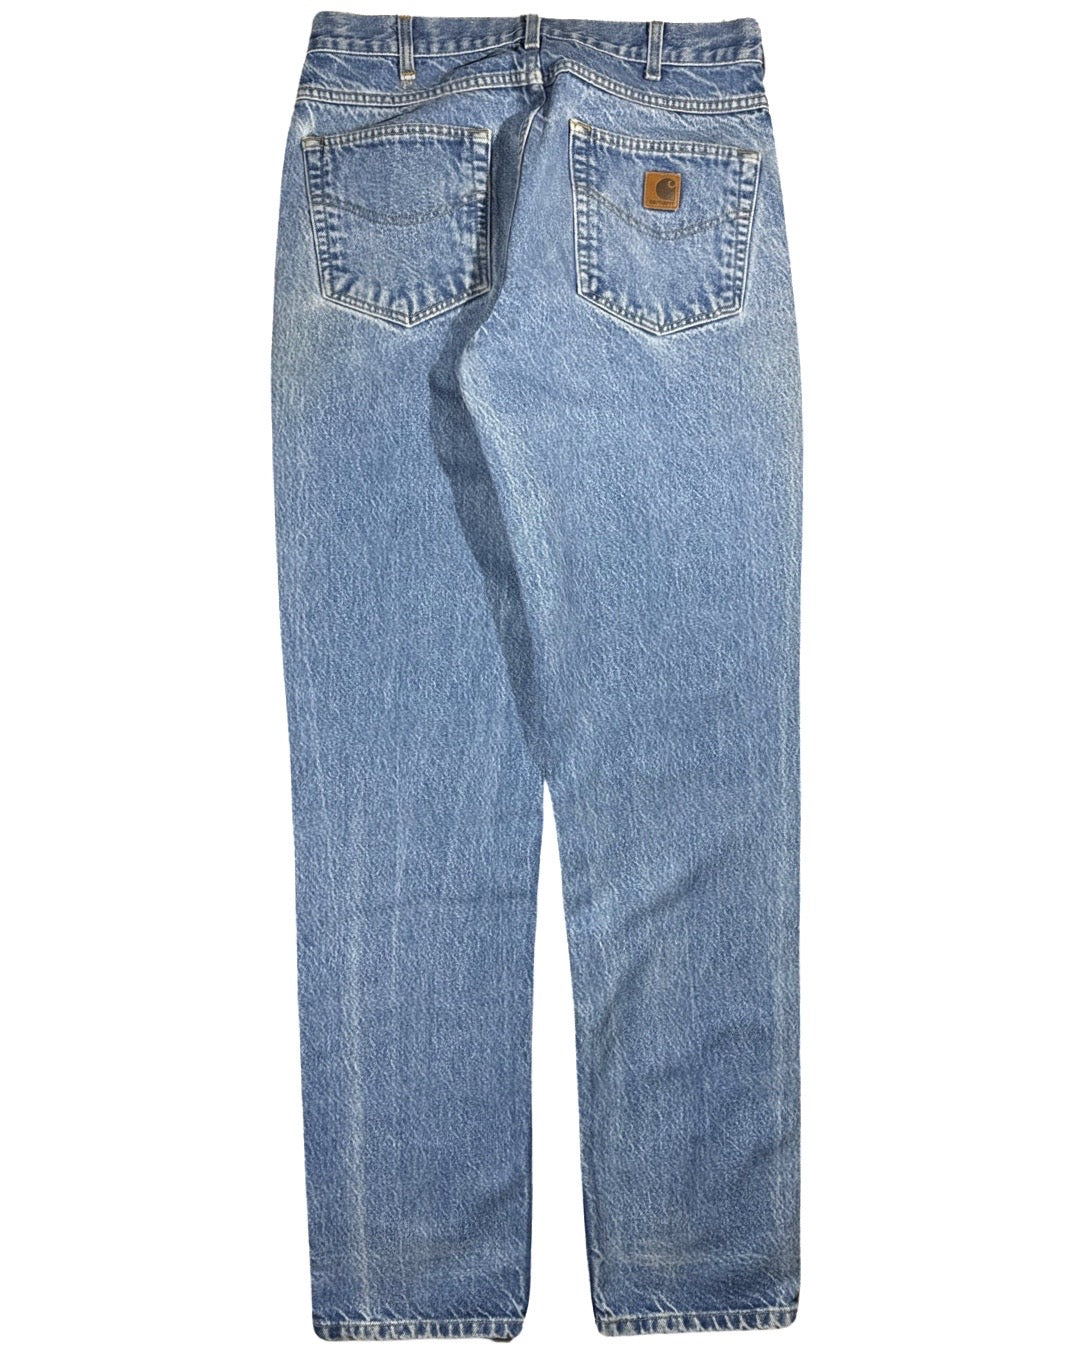 Vintage Carhartt Jeans - W 33"